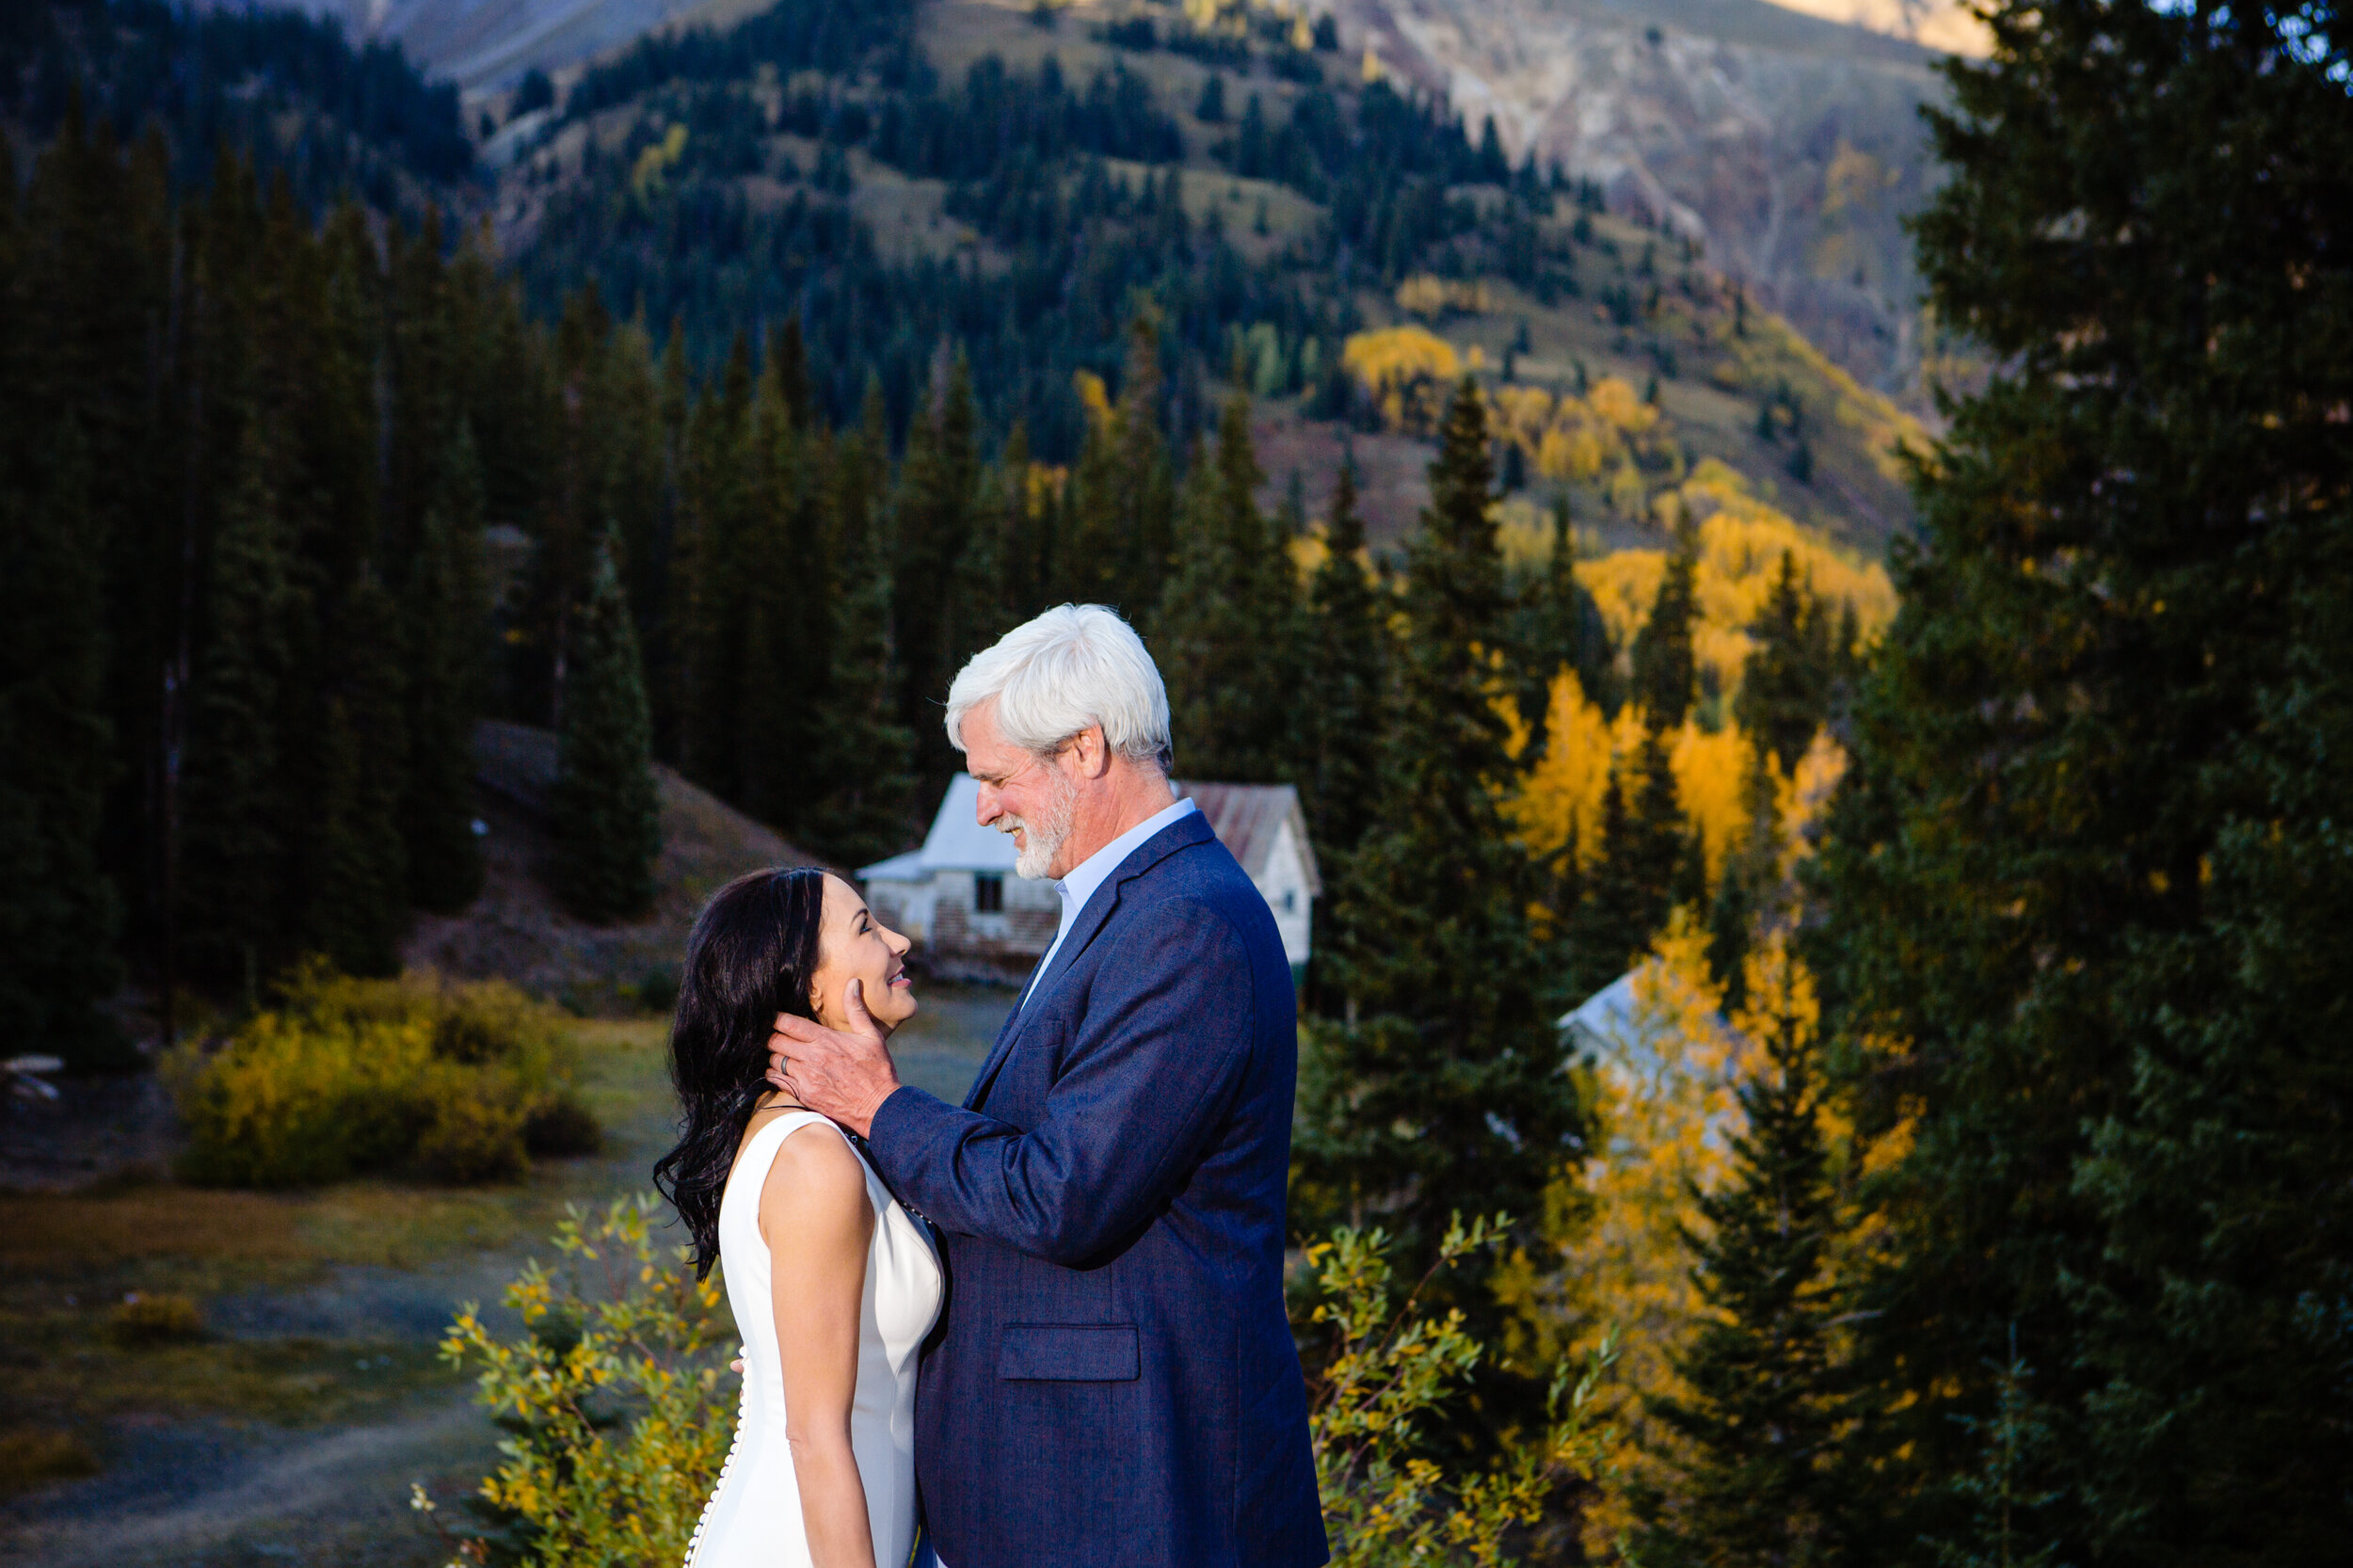  Ironton Ghost Town  Fall wedding  Ouray, Colorado  Red Mountain Pass Elopement  ©Alexi Hubbell Photography 2020 